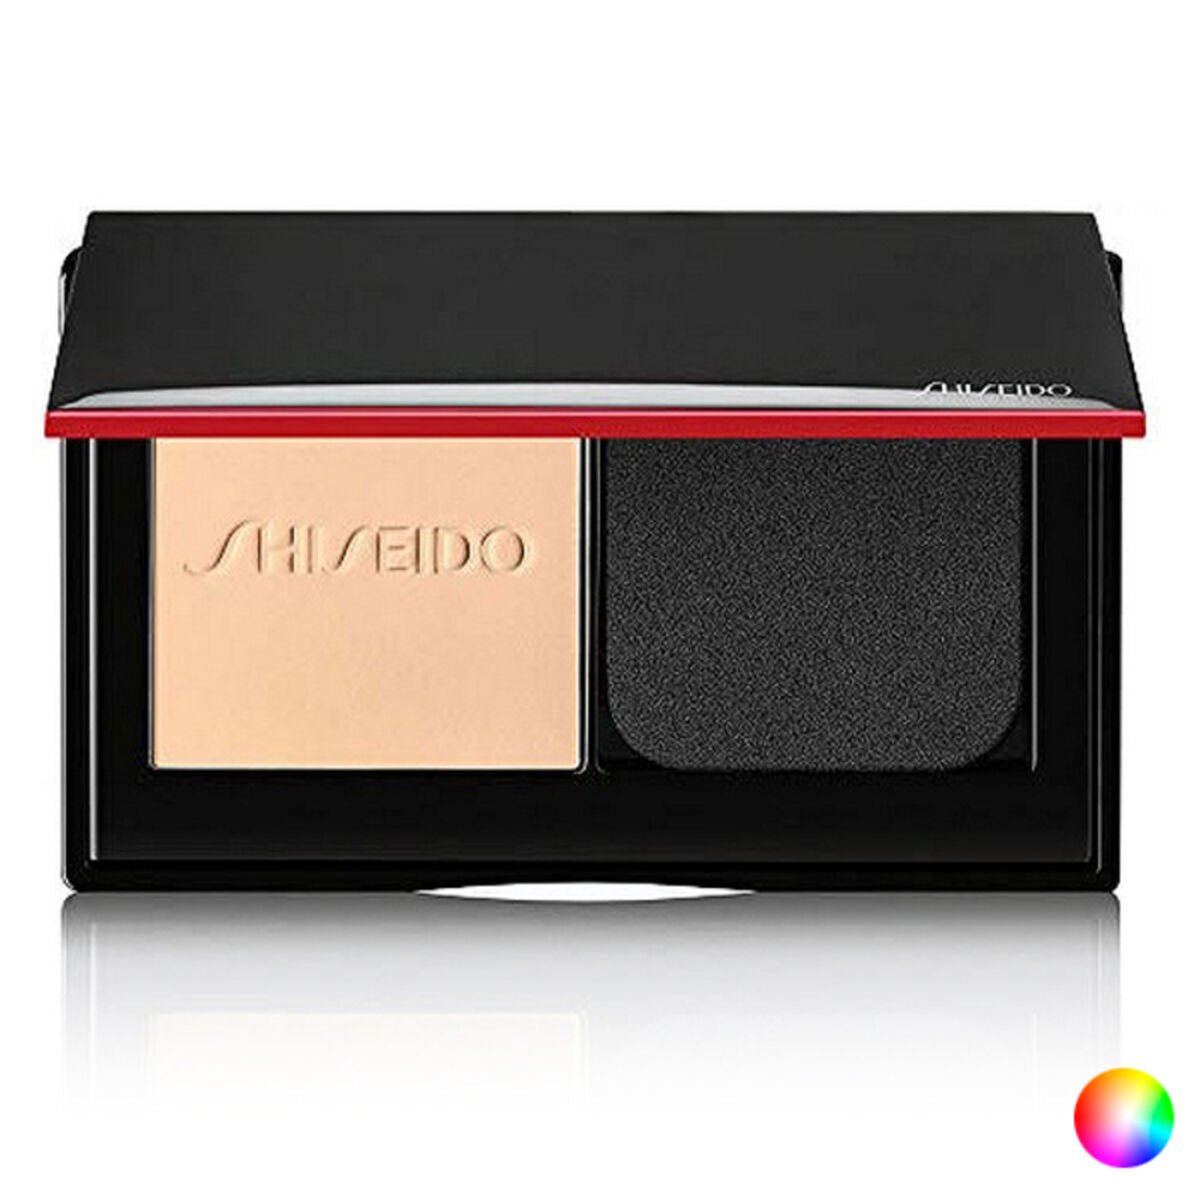 Powder Make-up Base Synchro Skin Self-refreshing Shiseido - JOSEPH BEAUTY